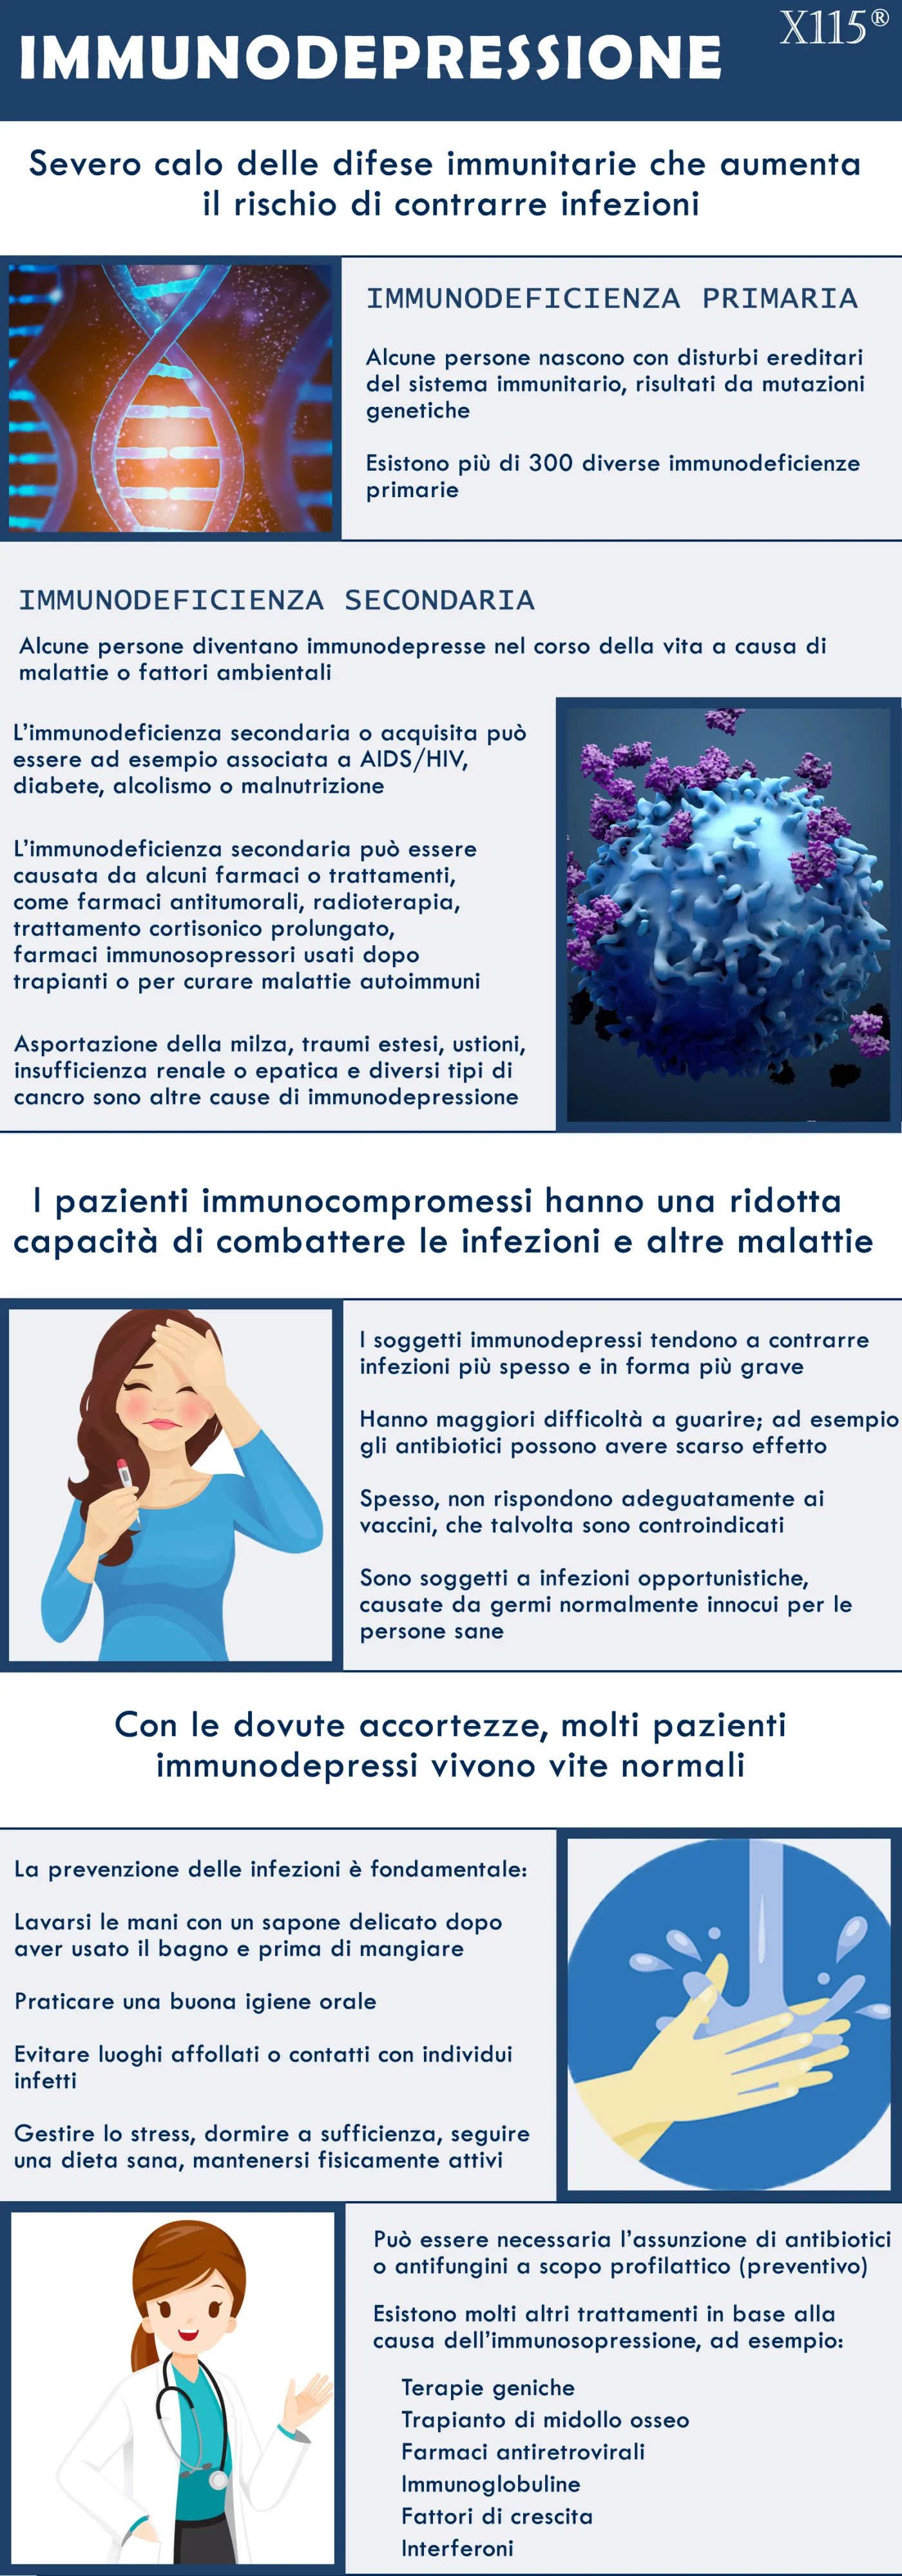 Immunodepressione infografica